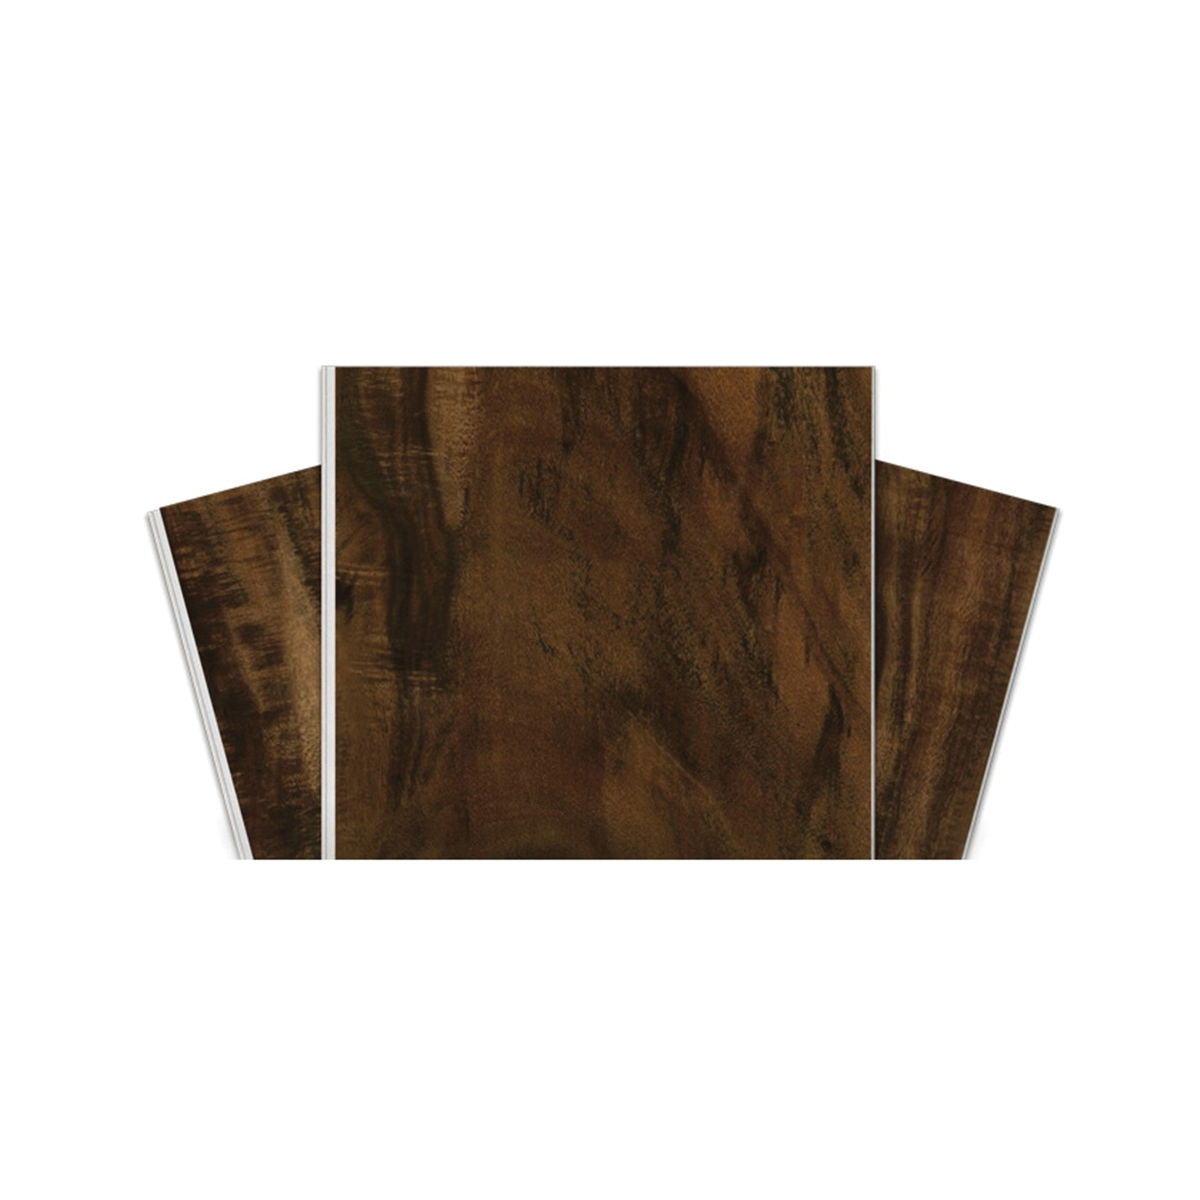 Pro Classic Series 7904108600 Plank Flooring, 48 in L, 7-1/8 in W, Micro Beveled Edge, Wood Grain Pattern, Vinyl